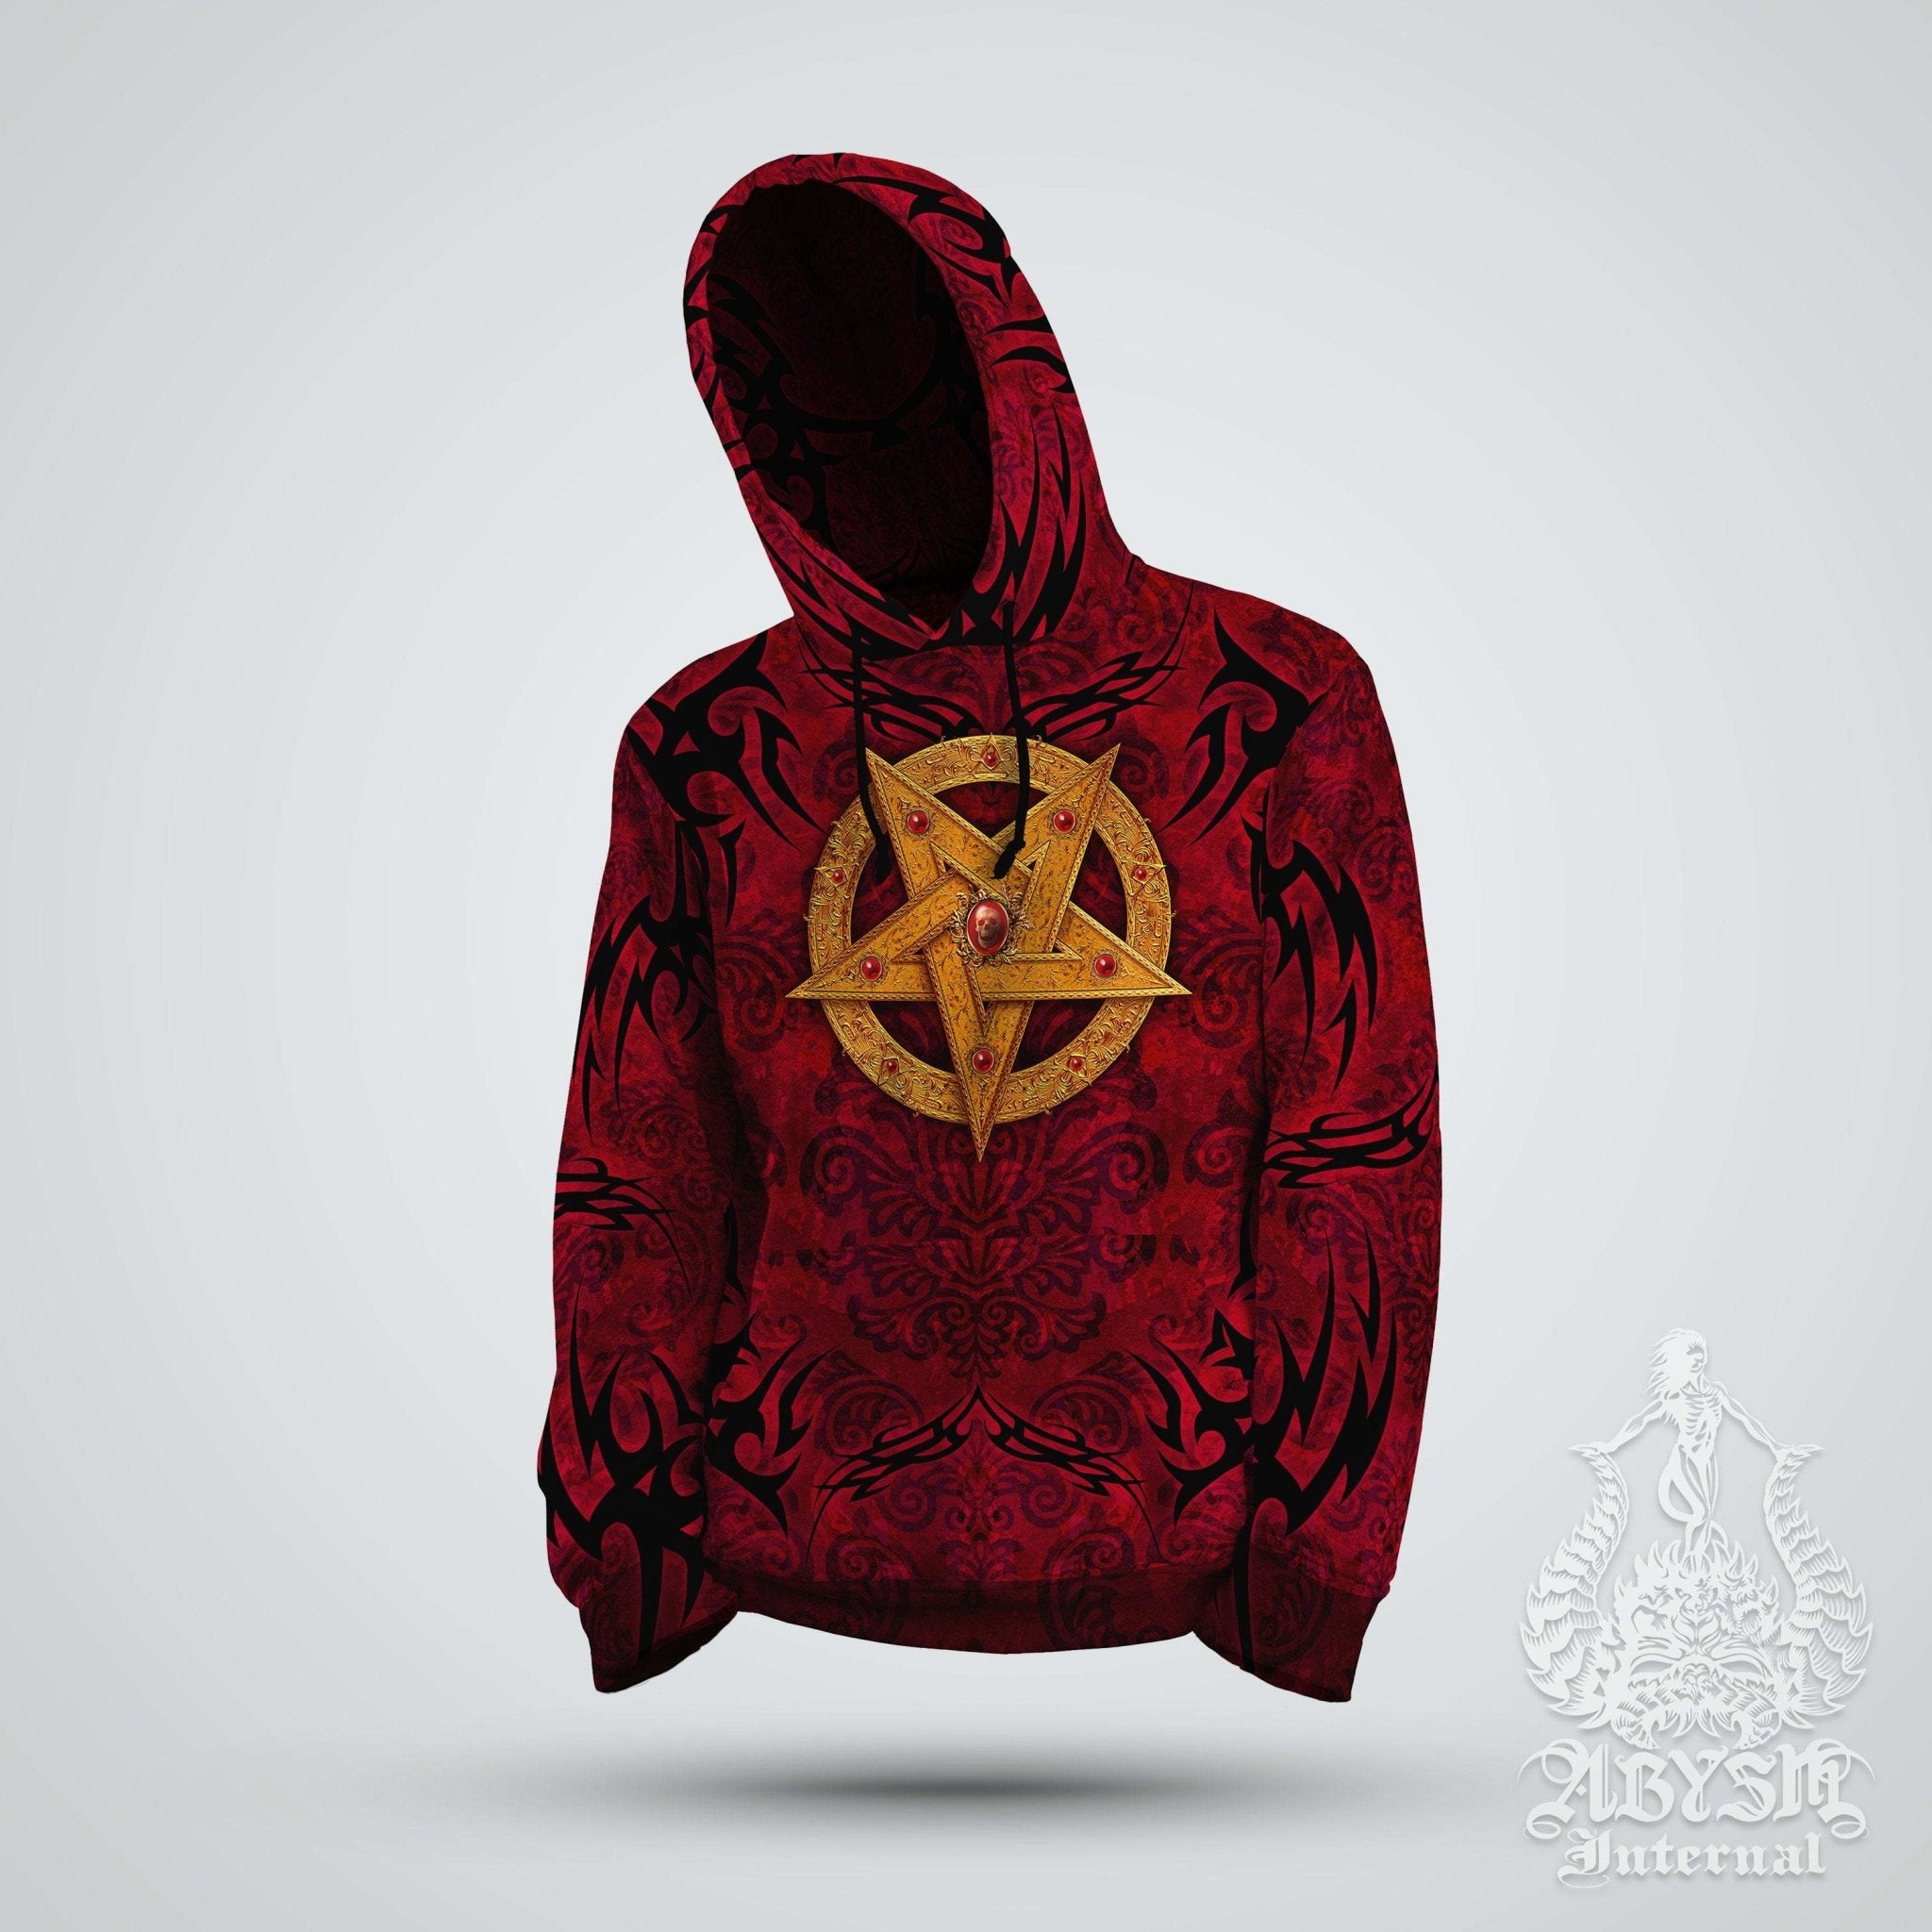 Pentagram Hoodie, Black Metal Streetwear, Gothic Sweater, Satanic Goth Outfit, Alternative Clothing, Unisex - Gold Red - Abysm Internal